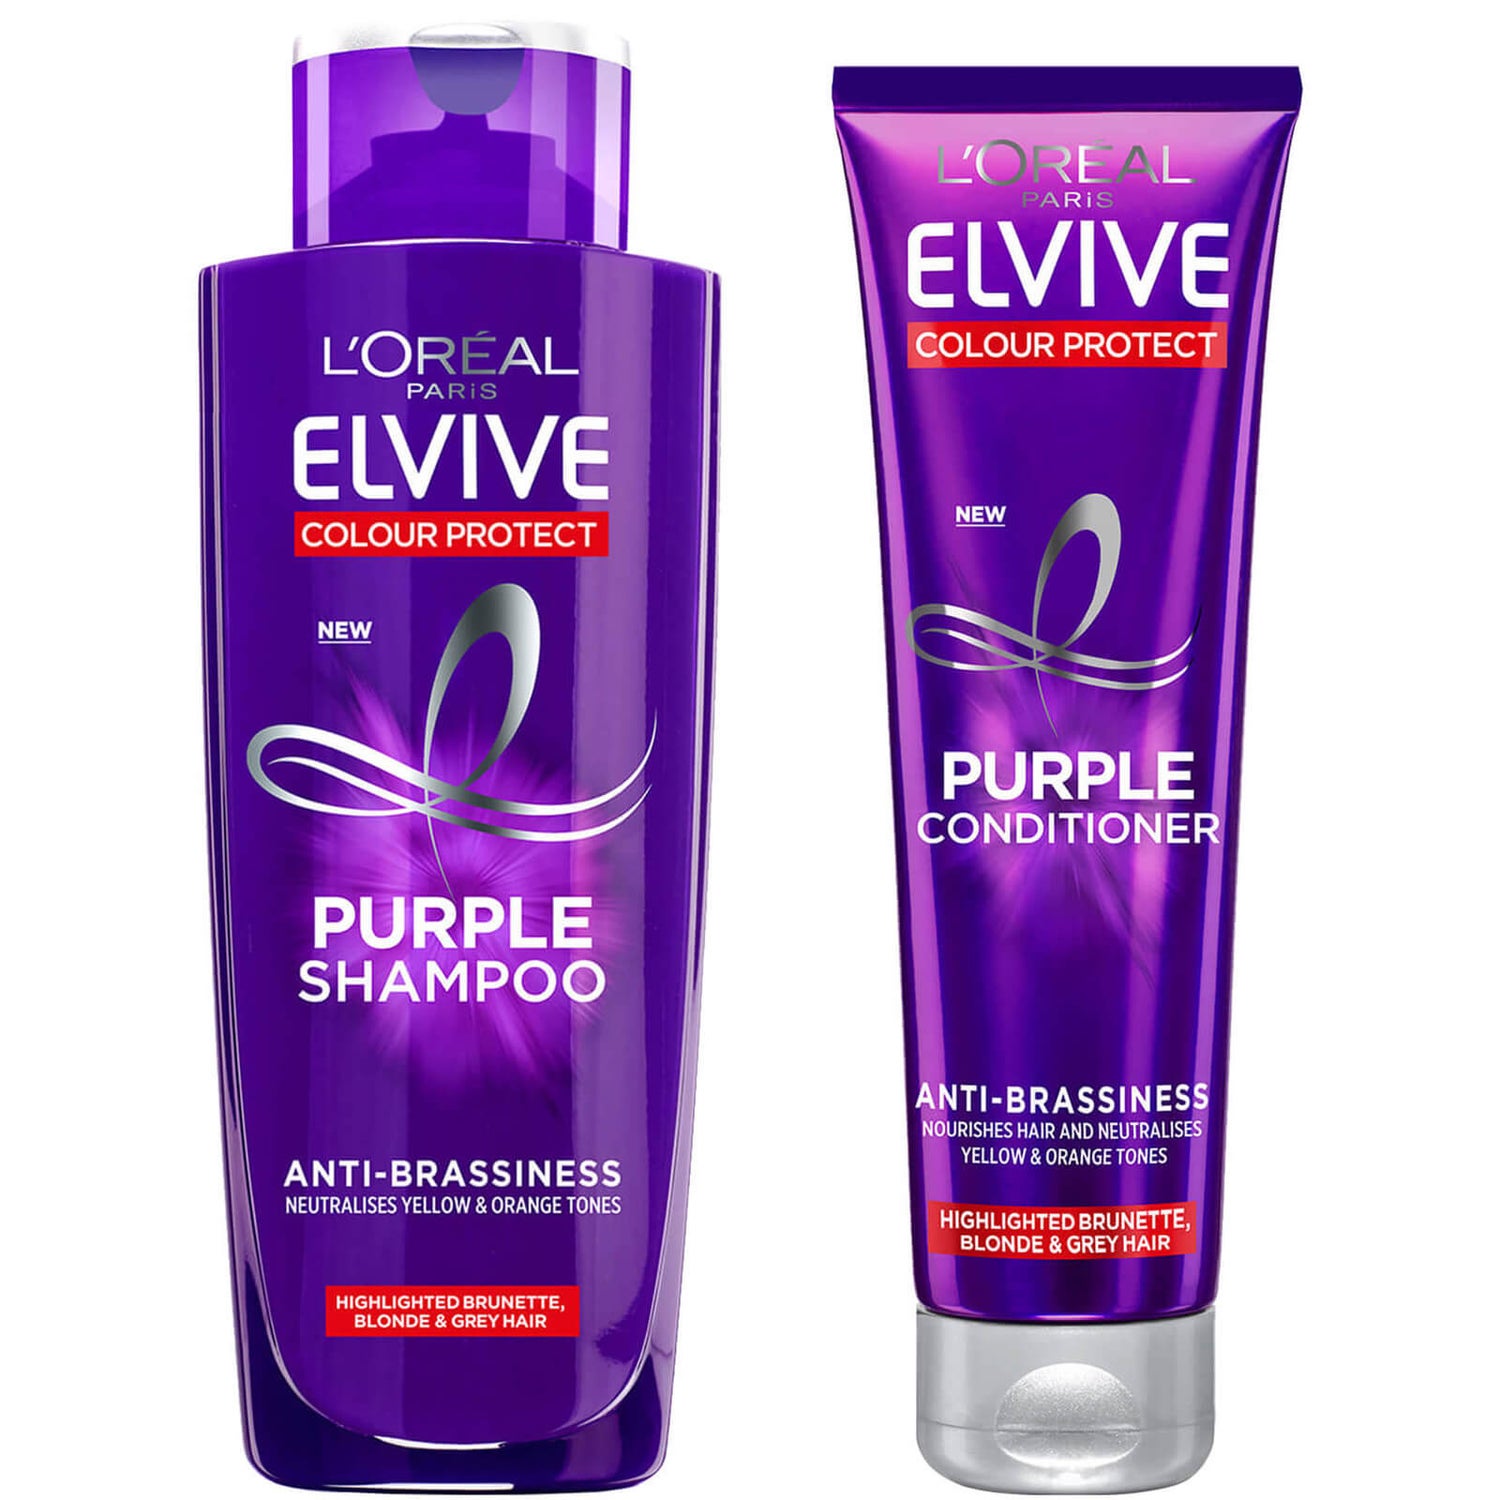 L'Oréal Paris Colour Protect Anti-Brassiness Purple Shampoo and Set - Exclusive | lookfantastic